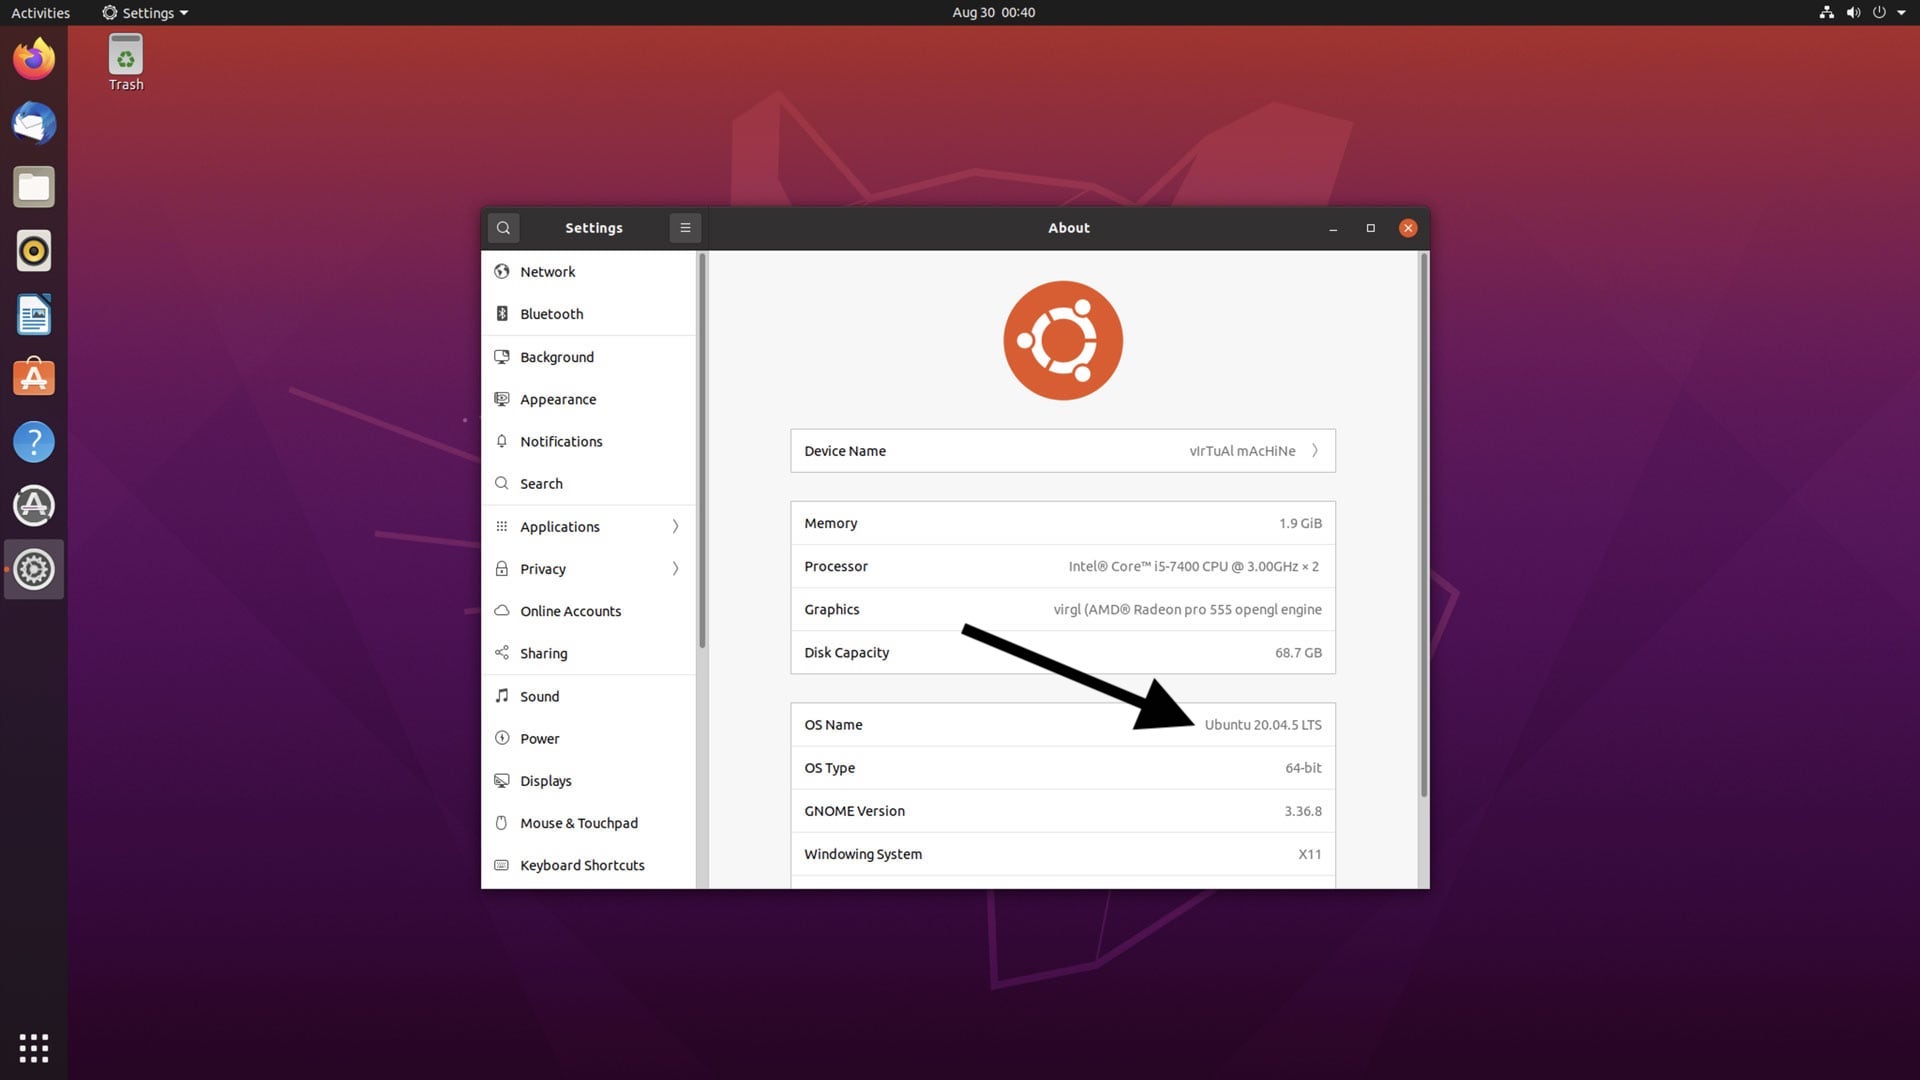 What kernel is Ubuntu 20.04 5 LTS?